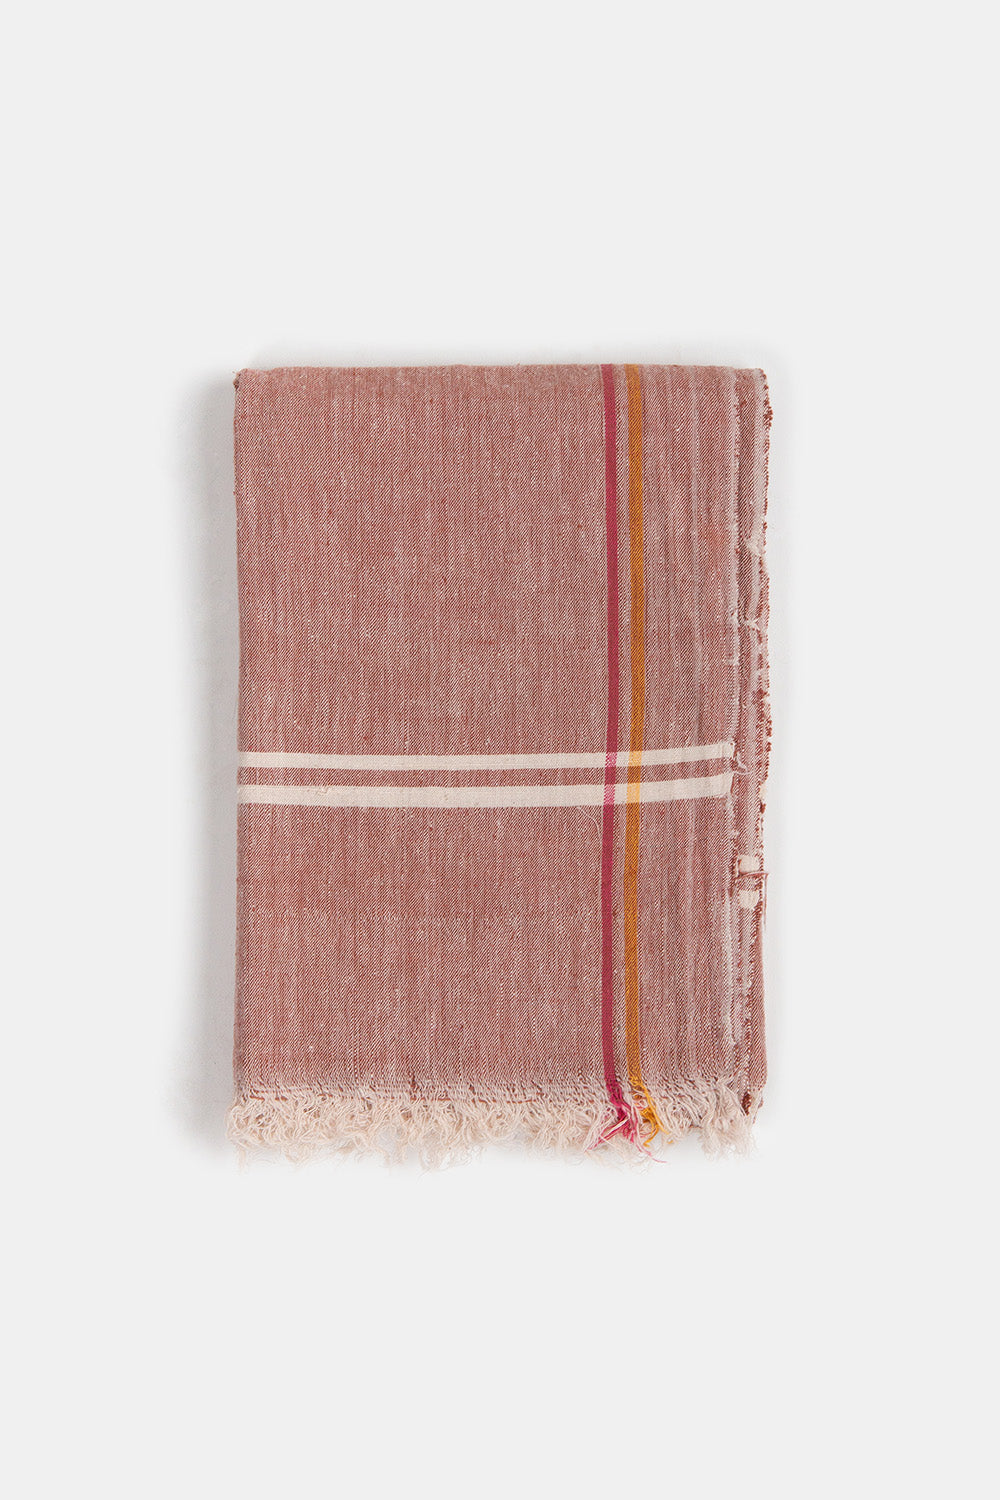 Khadi Cotton Towel in Rust